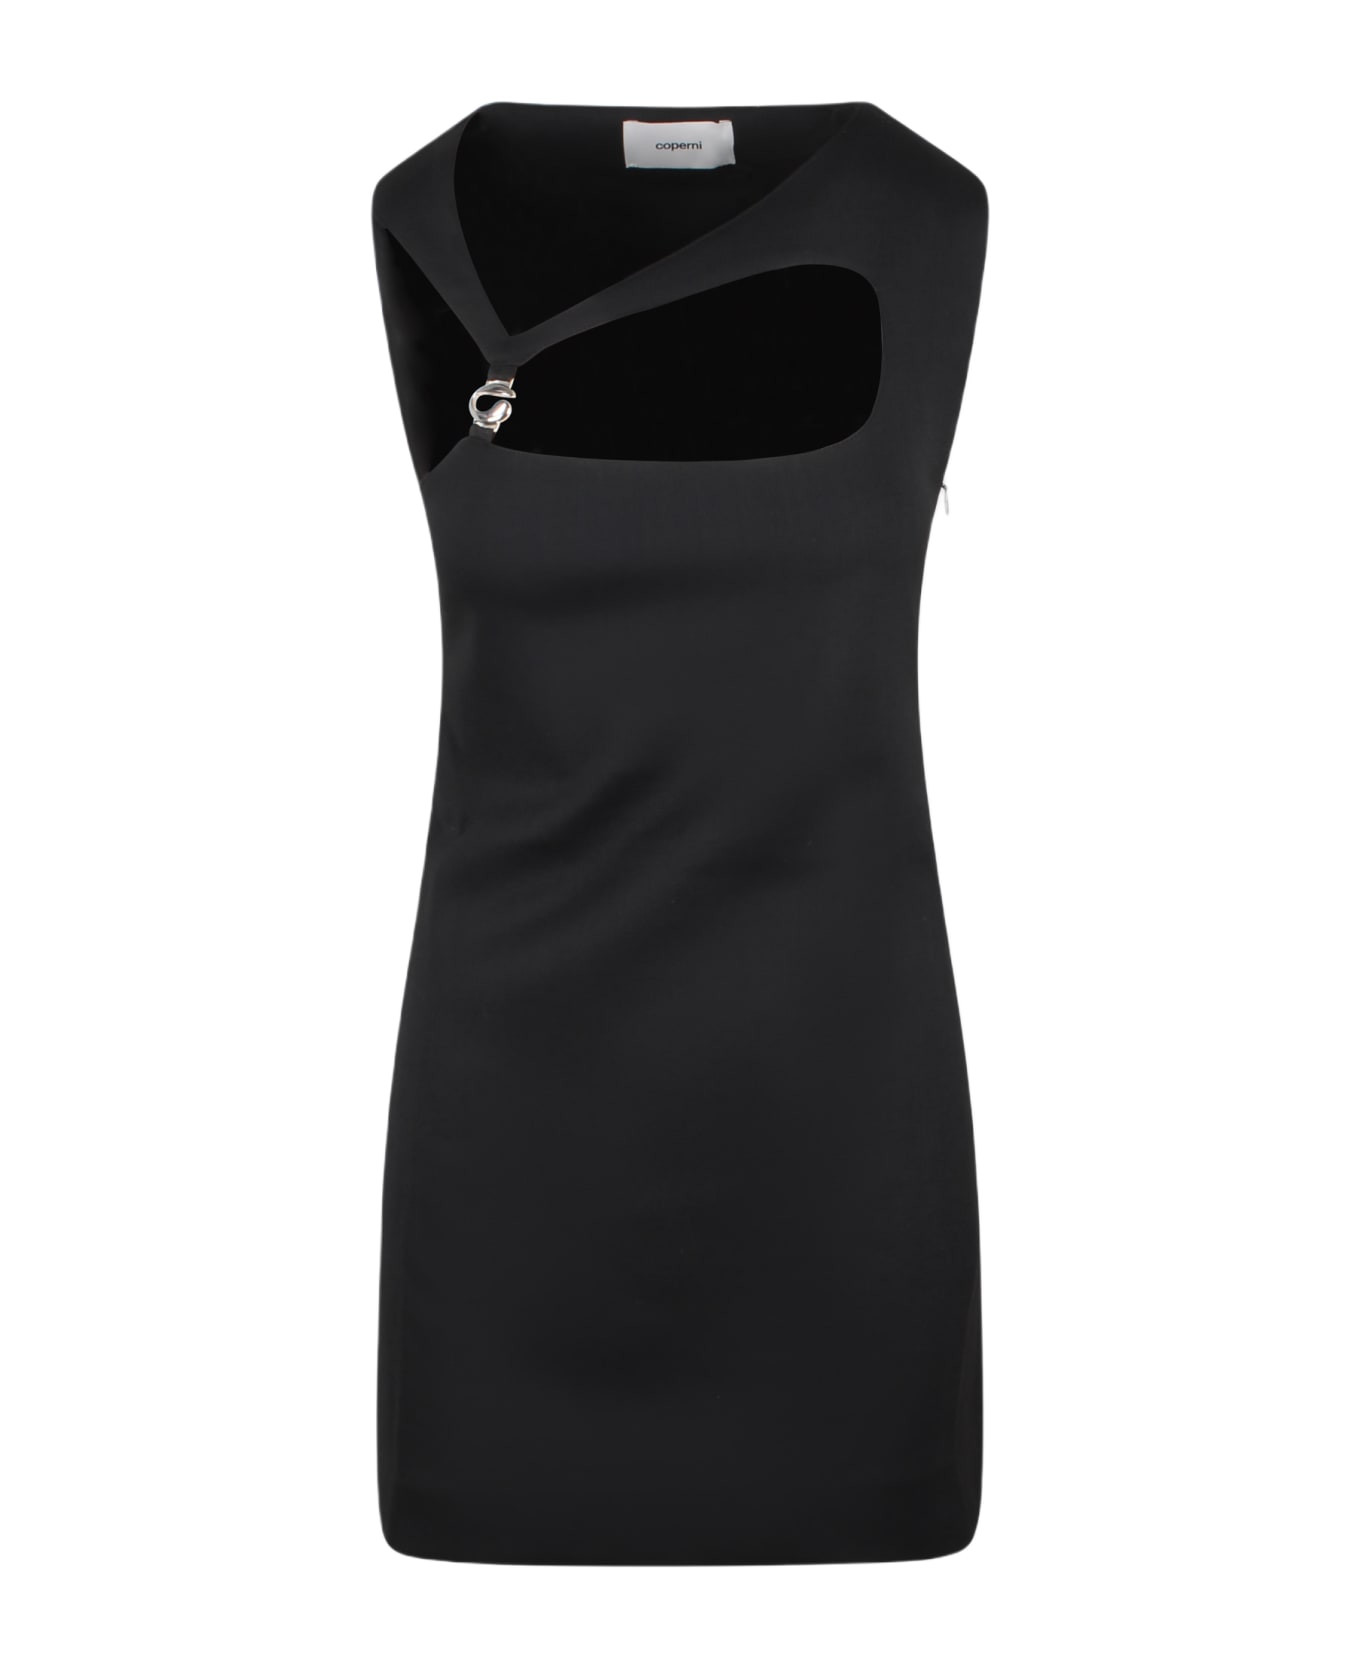 Coperni Cut Out Mini Dress - Black